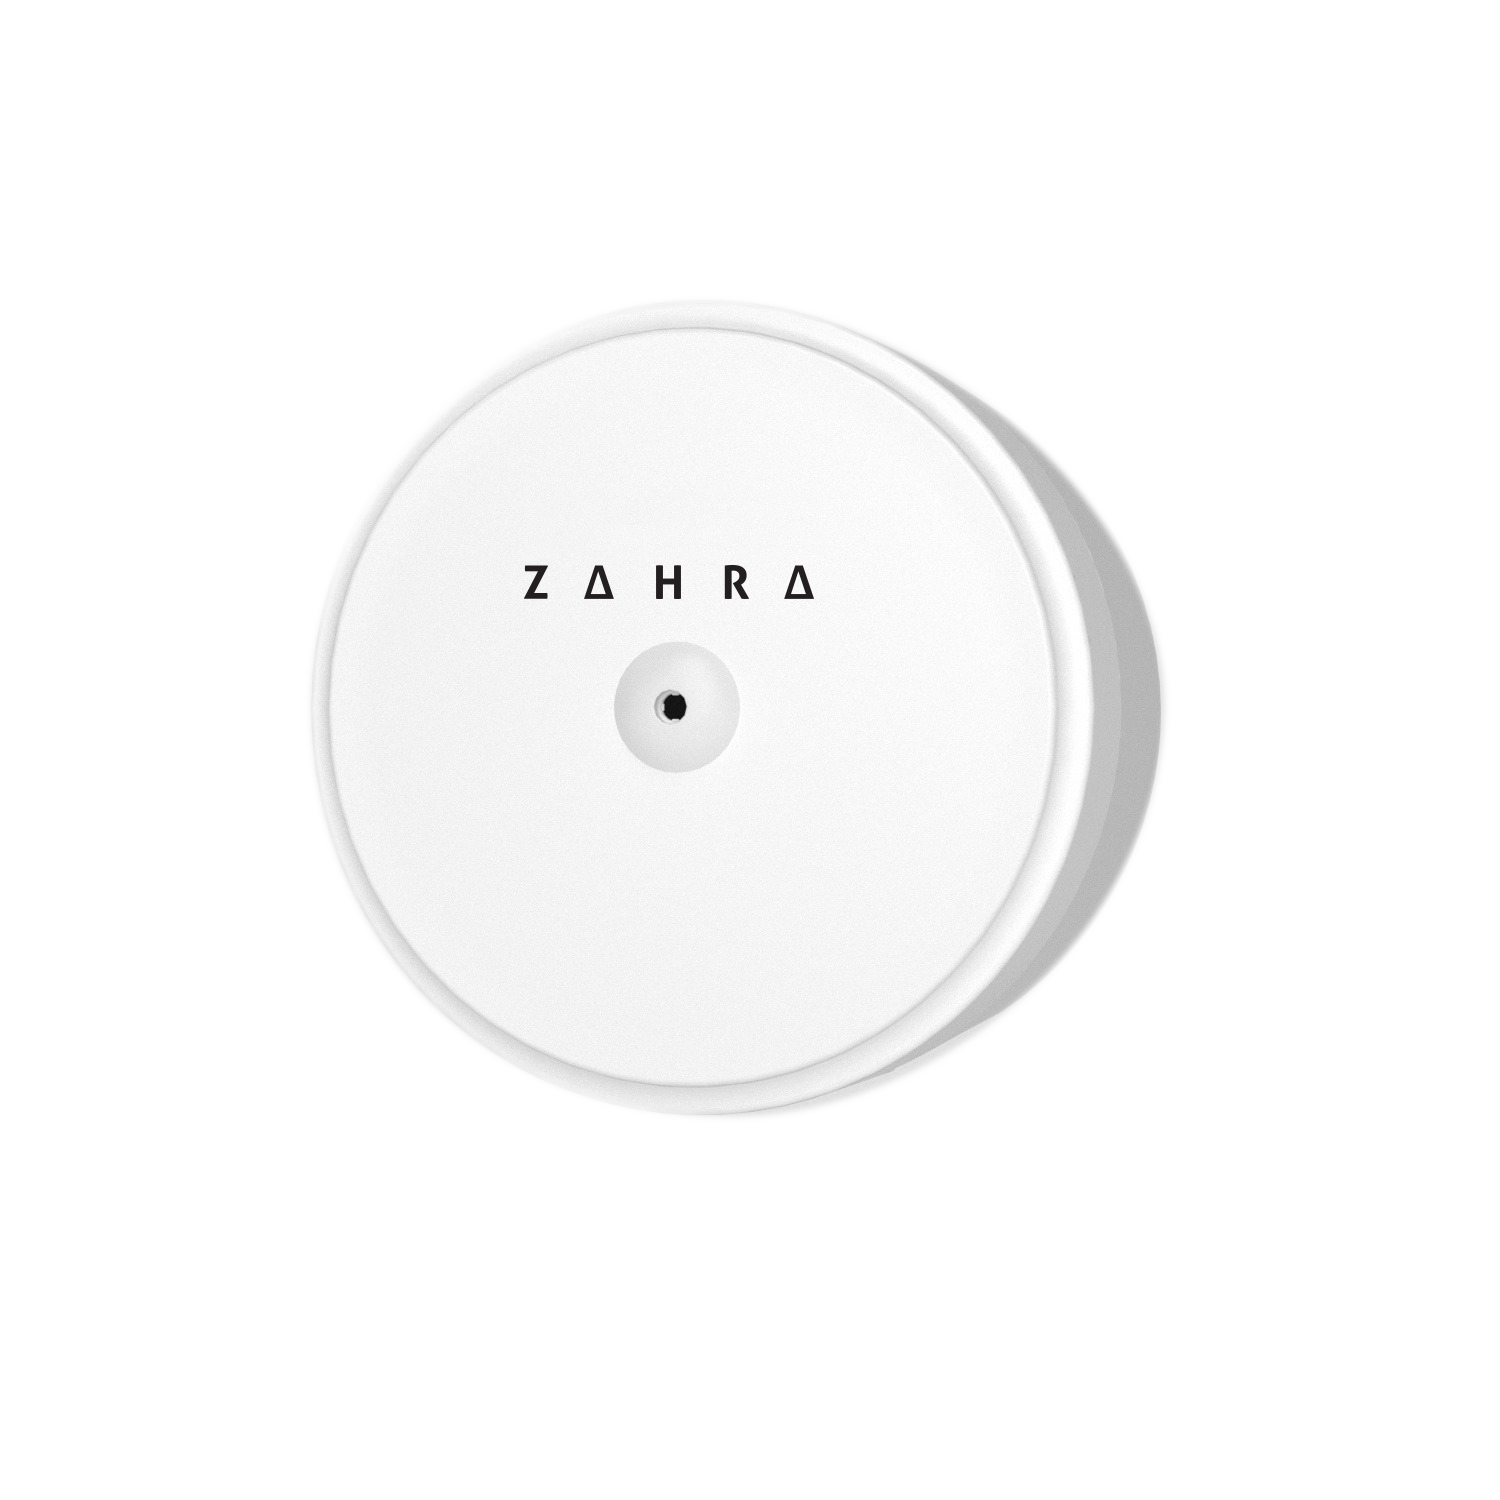 Jumbo Centerfeed Toilet Paper Dispenser - Zahra hygiene